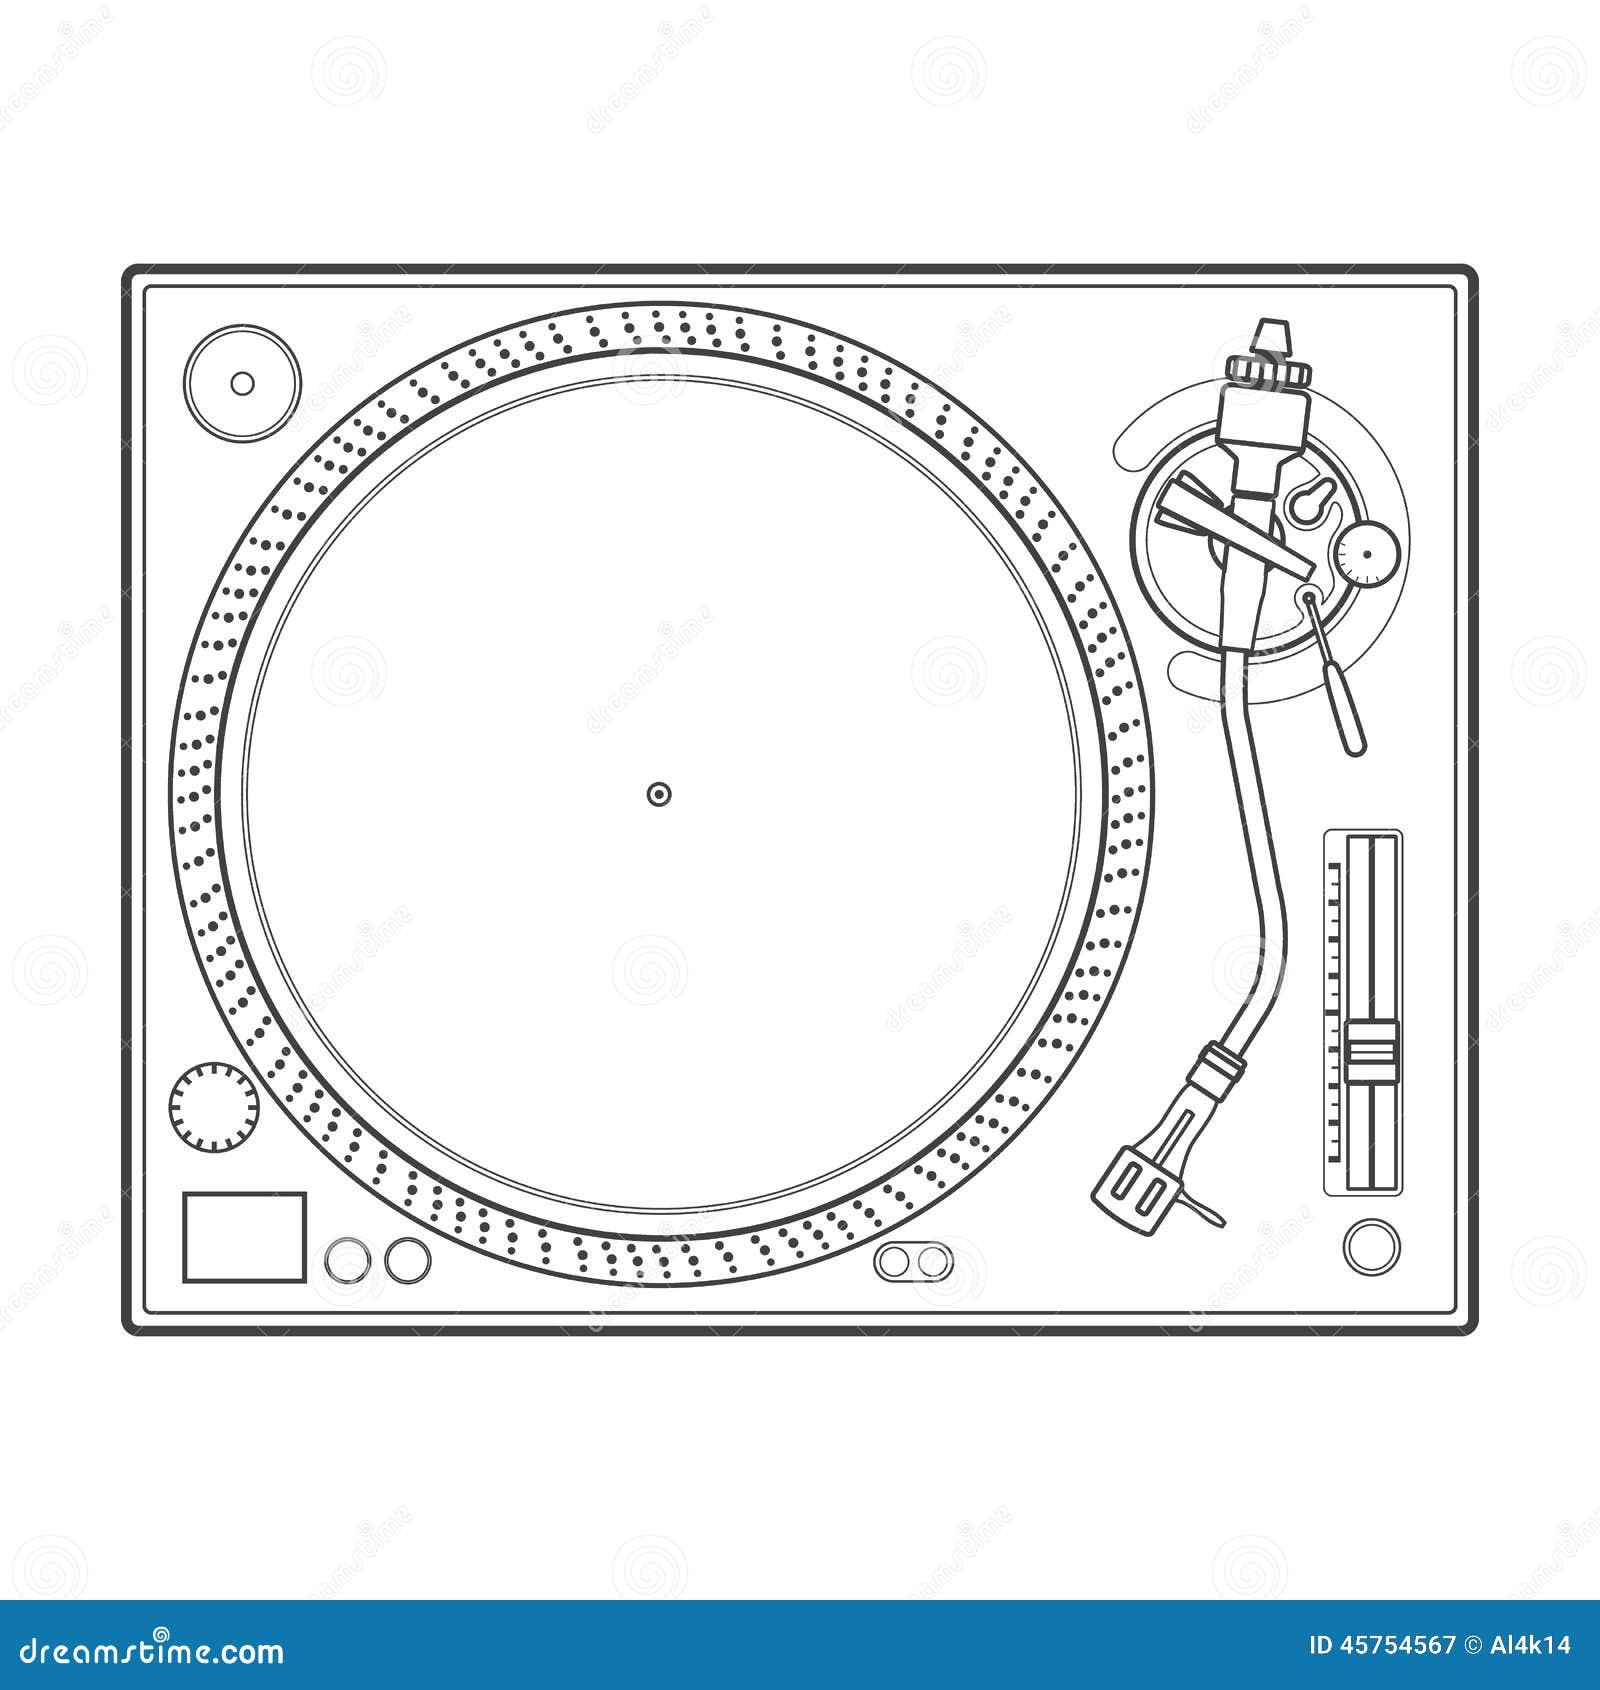 Outline vinyl turntable stock vector. Illustration of instrument - 45754567